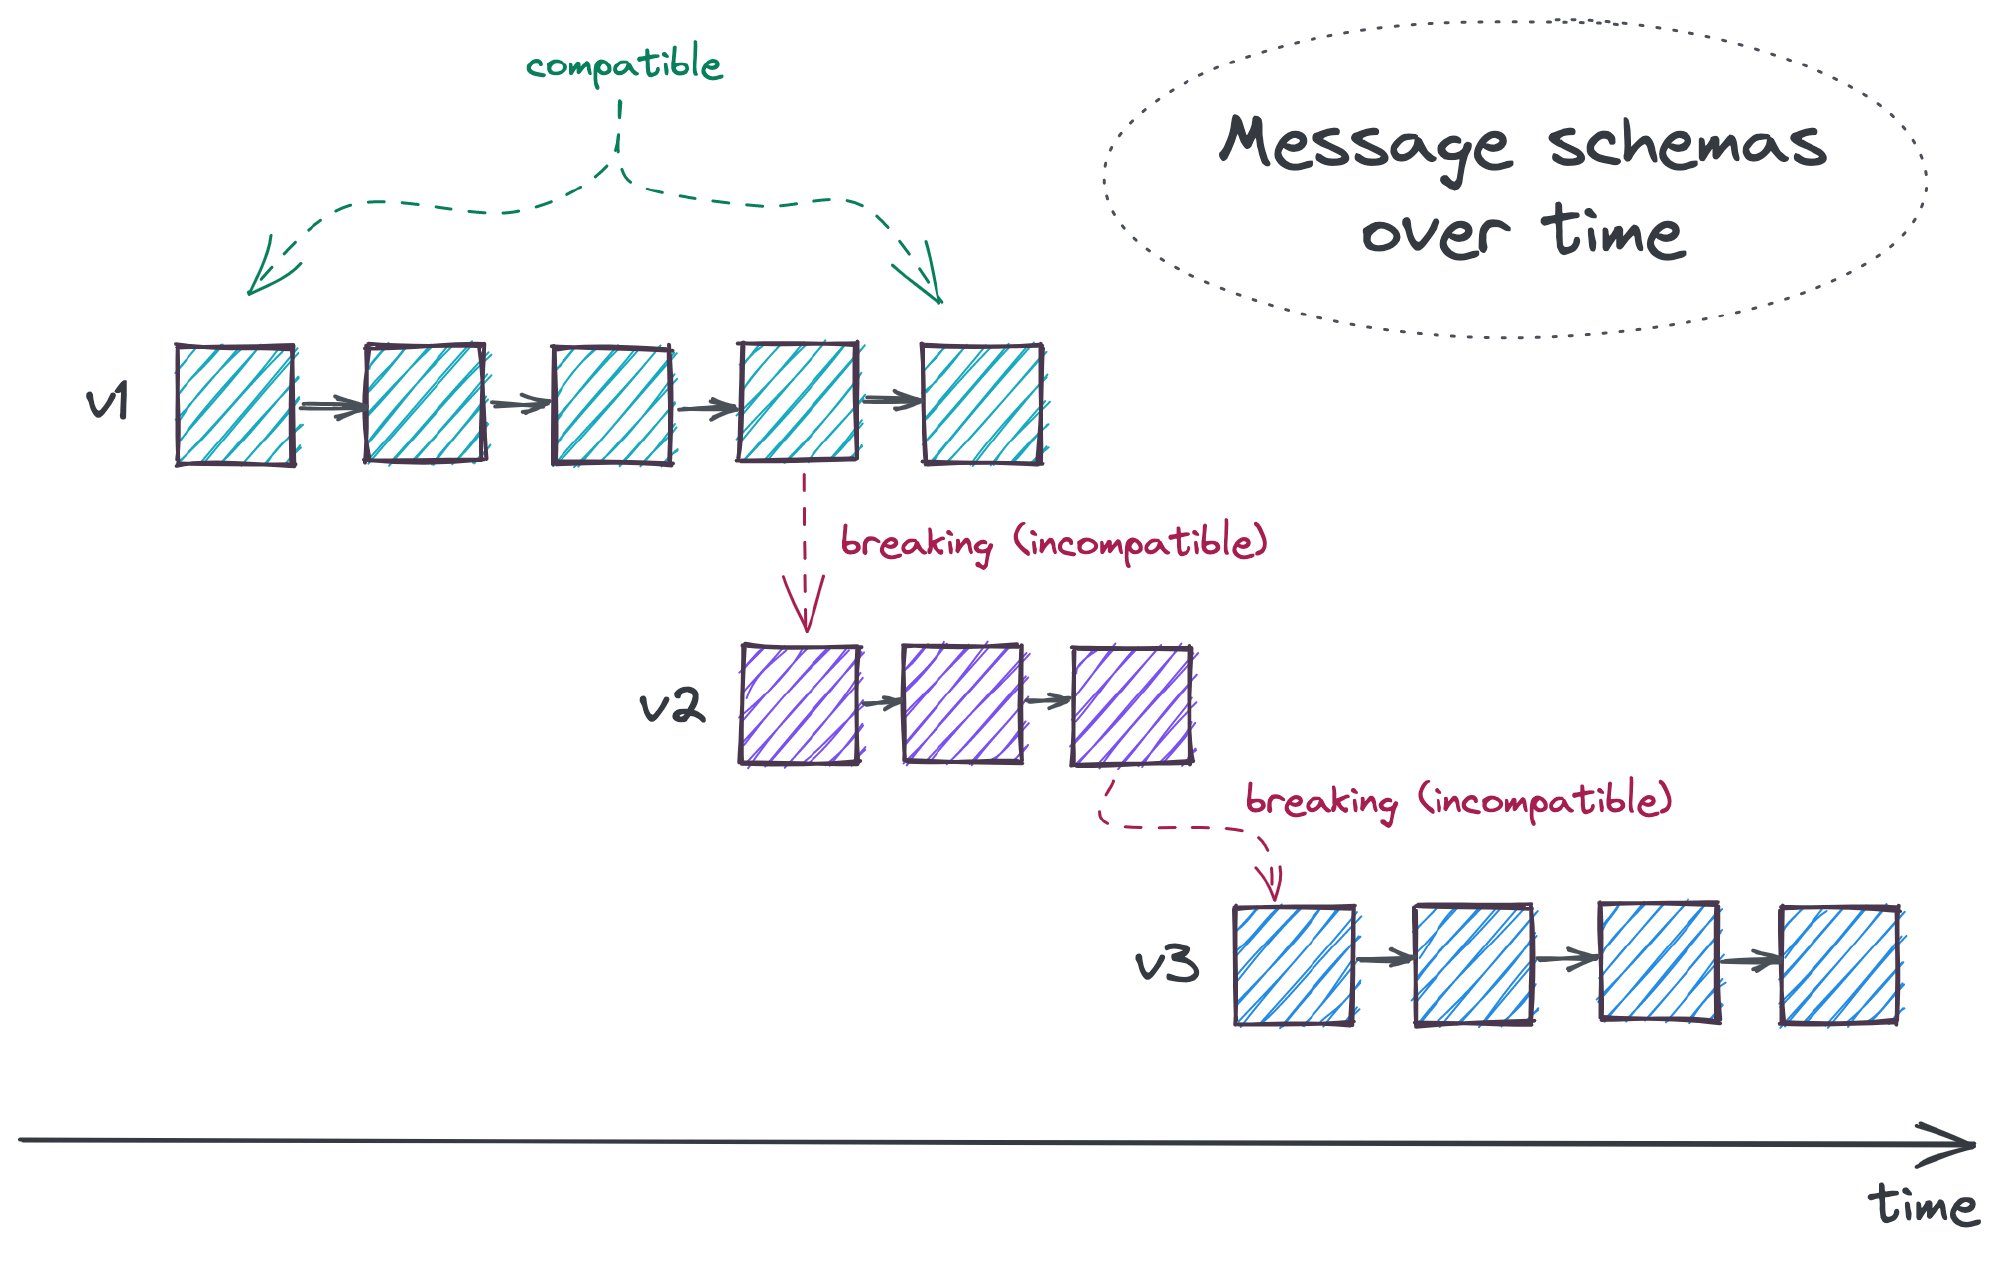 An illustration of the schema evolution process